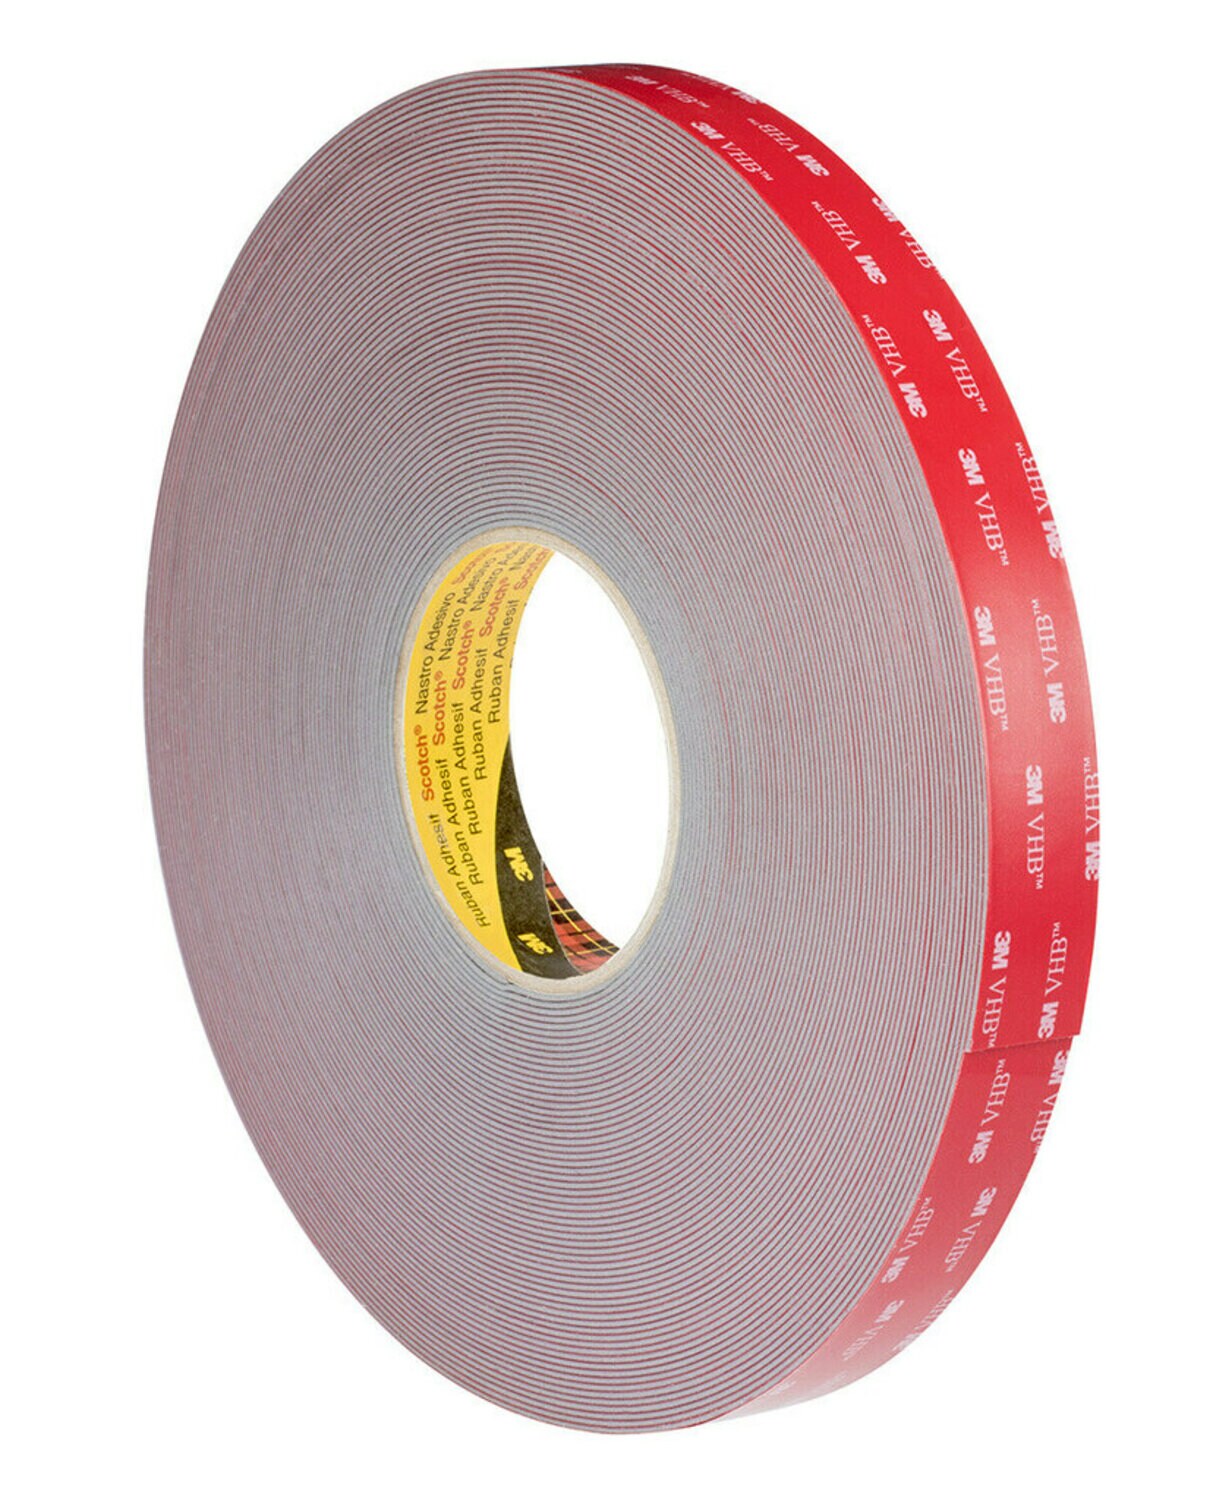 7100171934 - 3M VHB Tape GPH-110GF, Gray, 1/2 in x 36 yd, 45 mil, Film Liner, 18
rolls per case